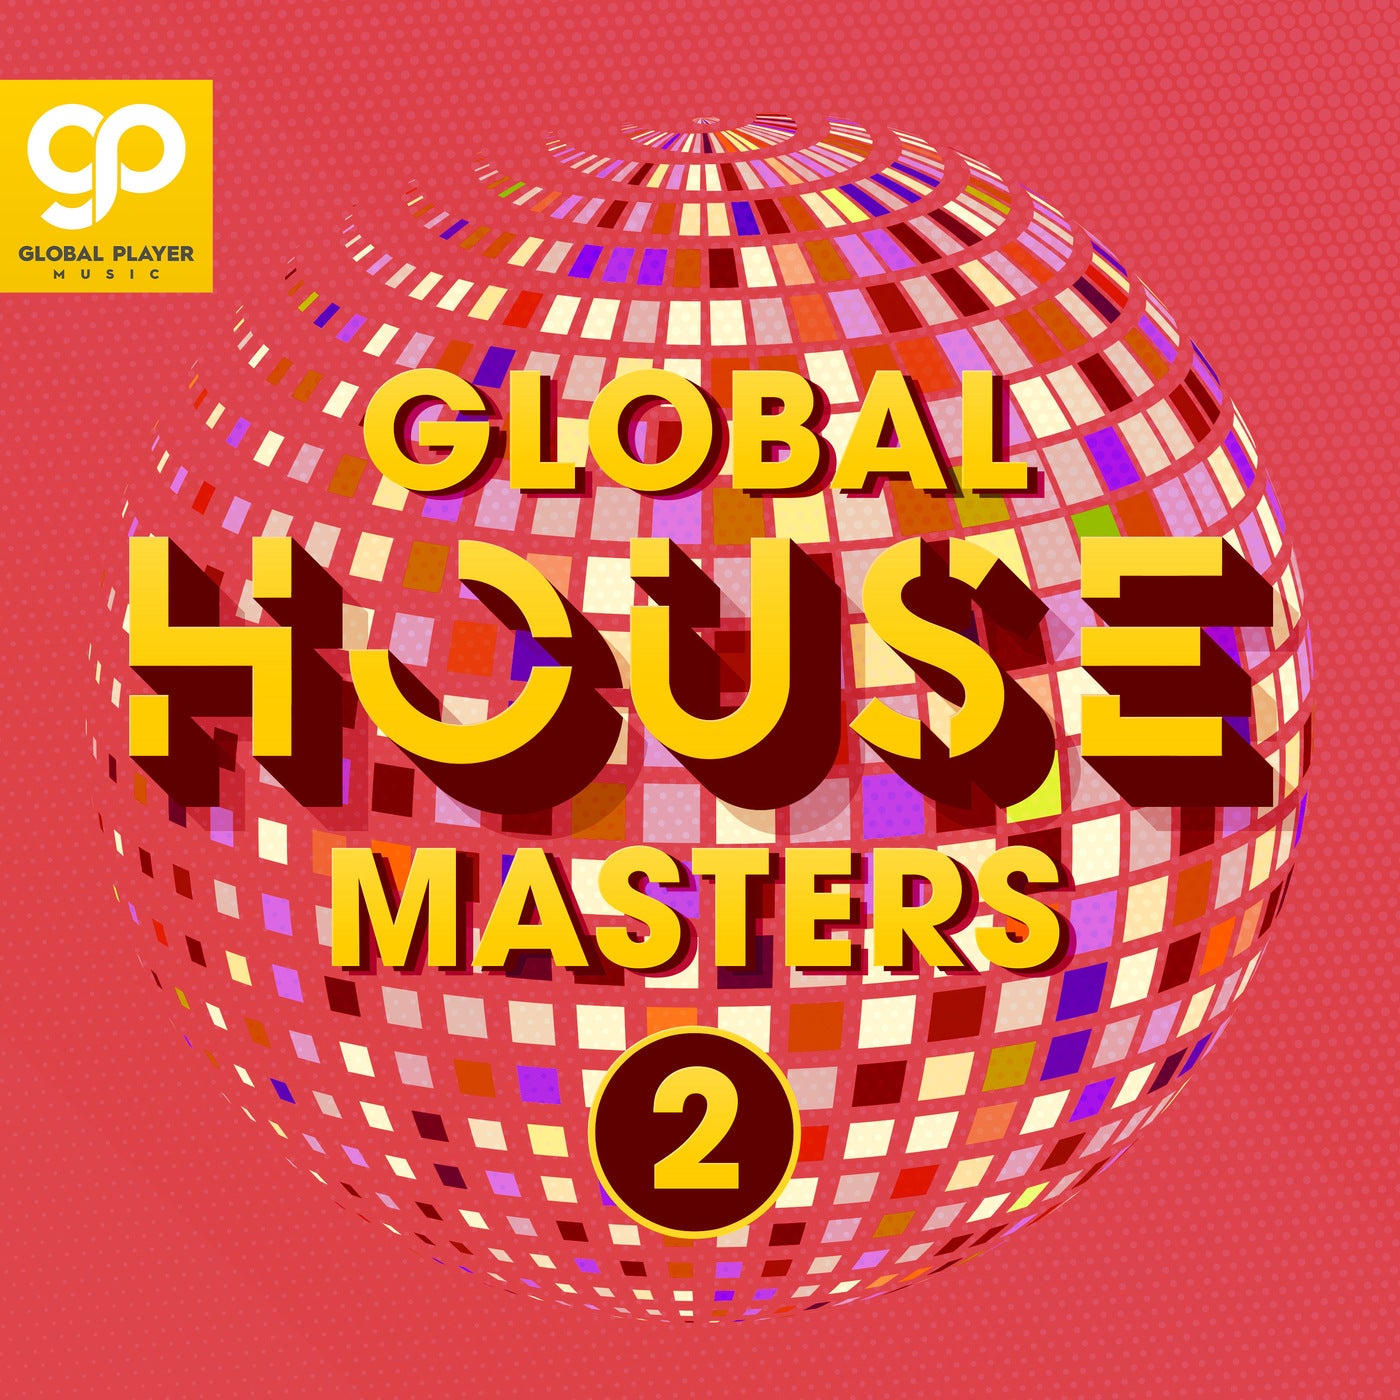 Global House Masters, Vol. 2